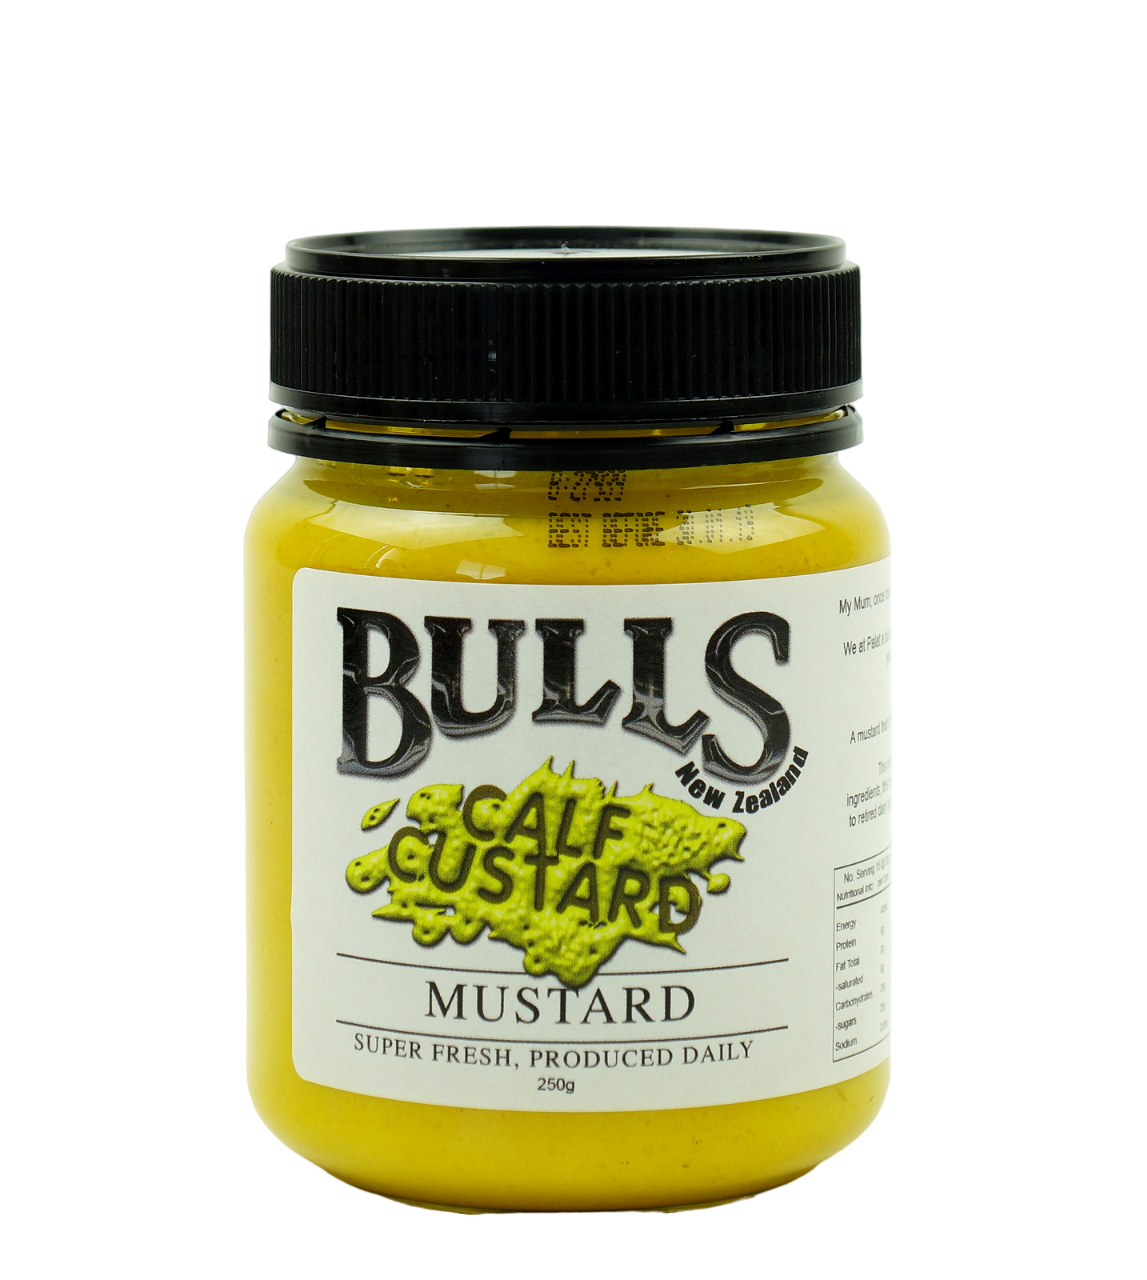 What a Load of Bull - Calf Custard Mustard